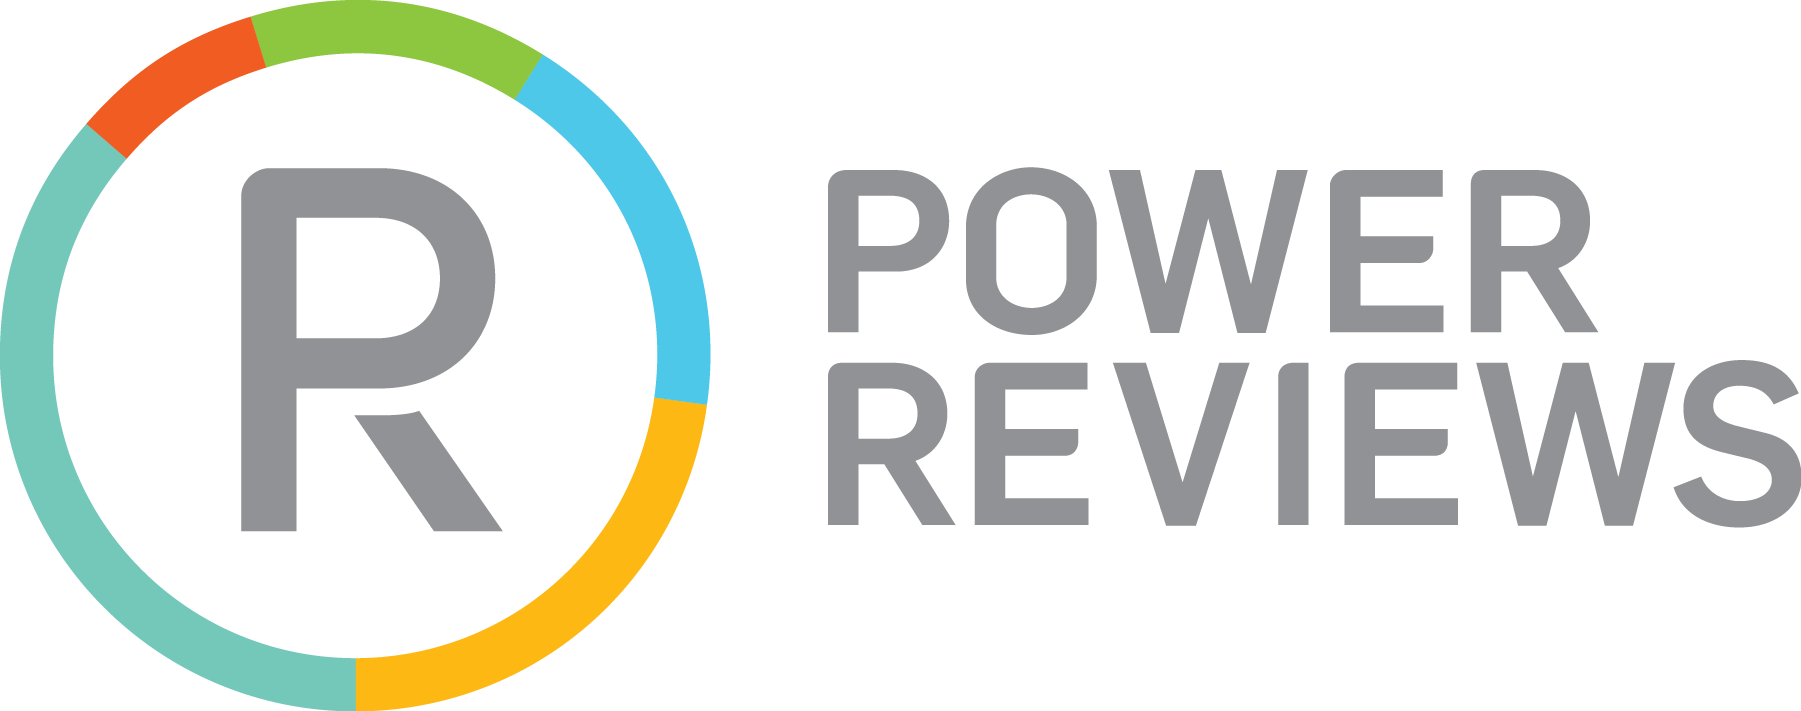 PowerReviews_logo_RGB copy (1).png